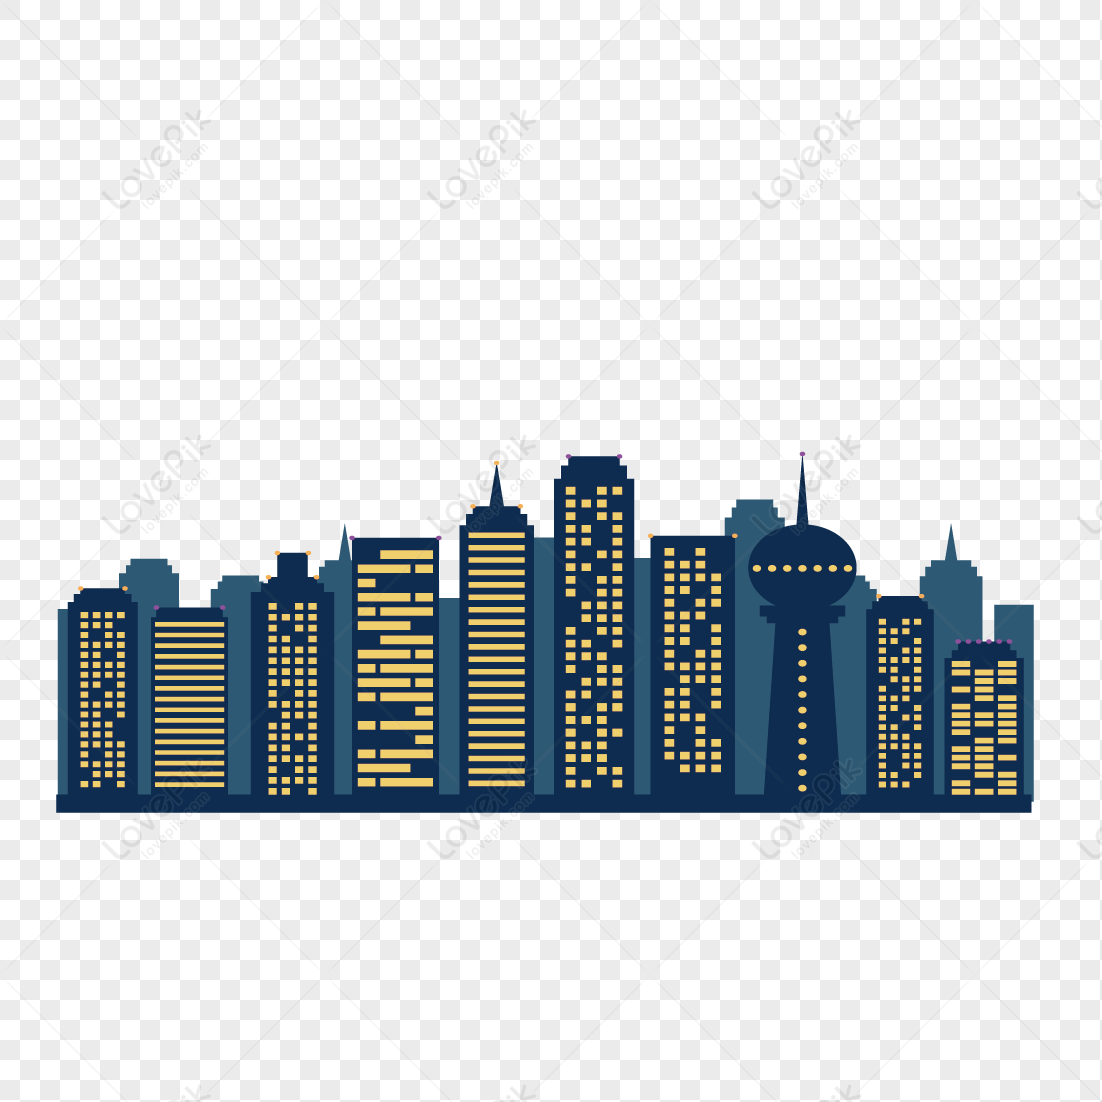 City, city vector, city icon, art city png transparent background